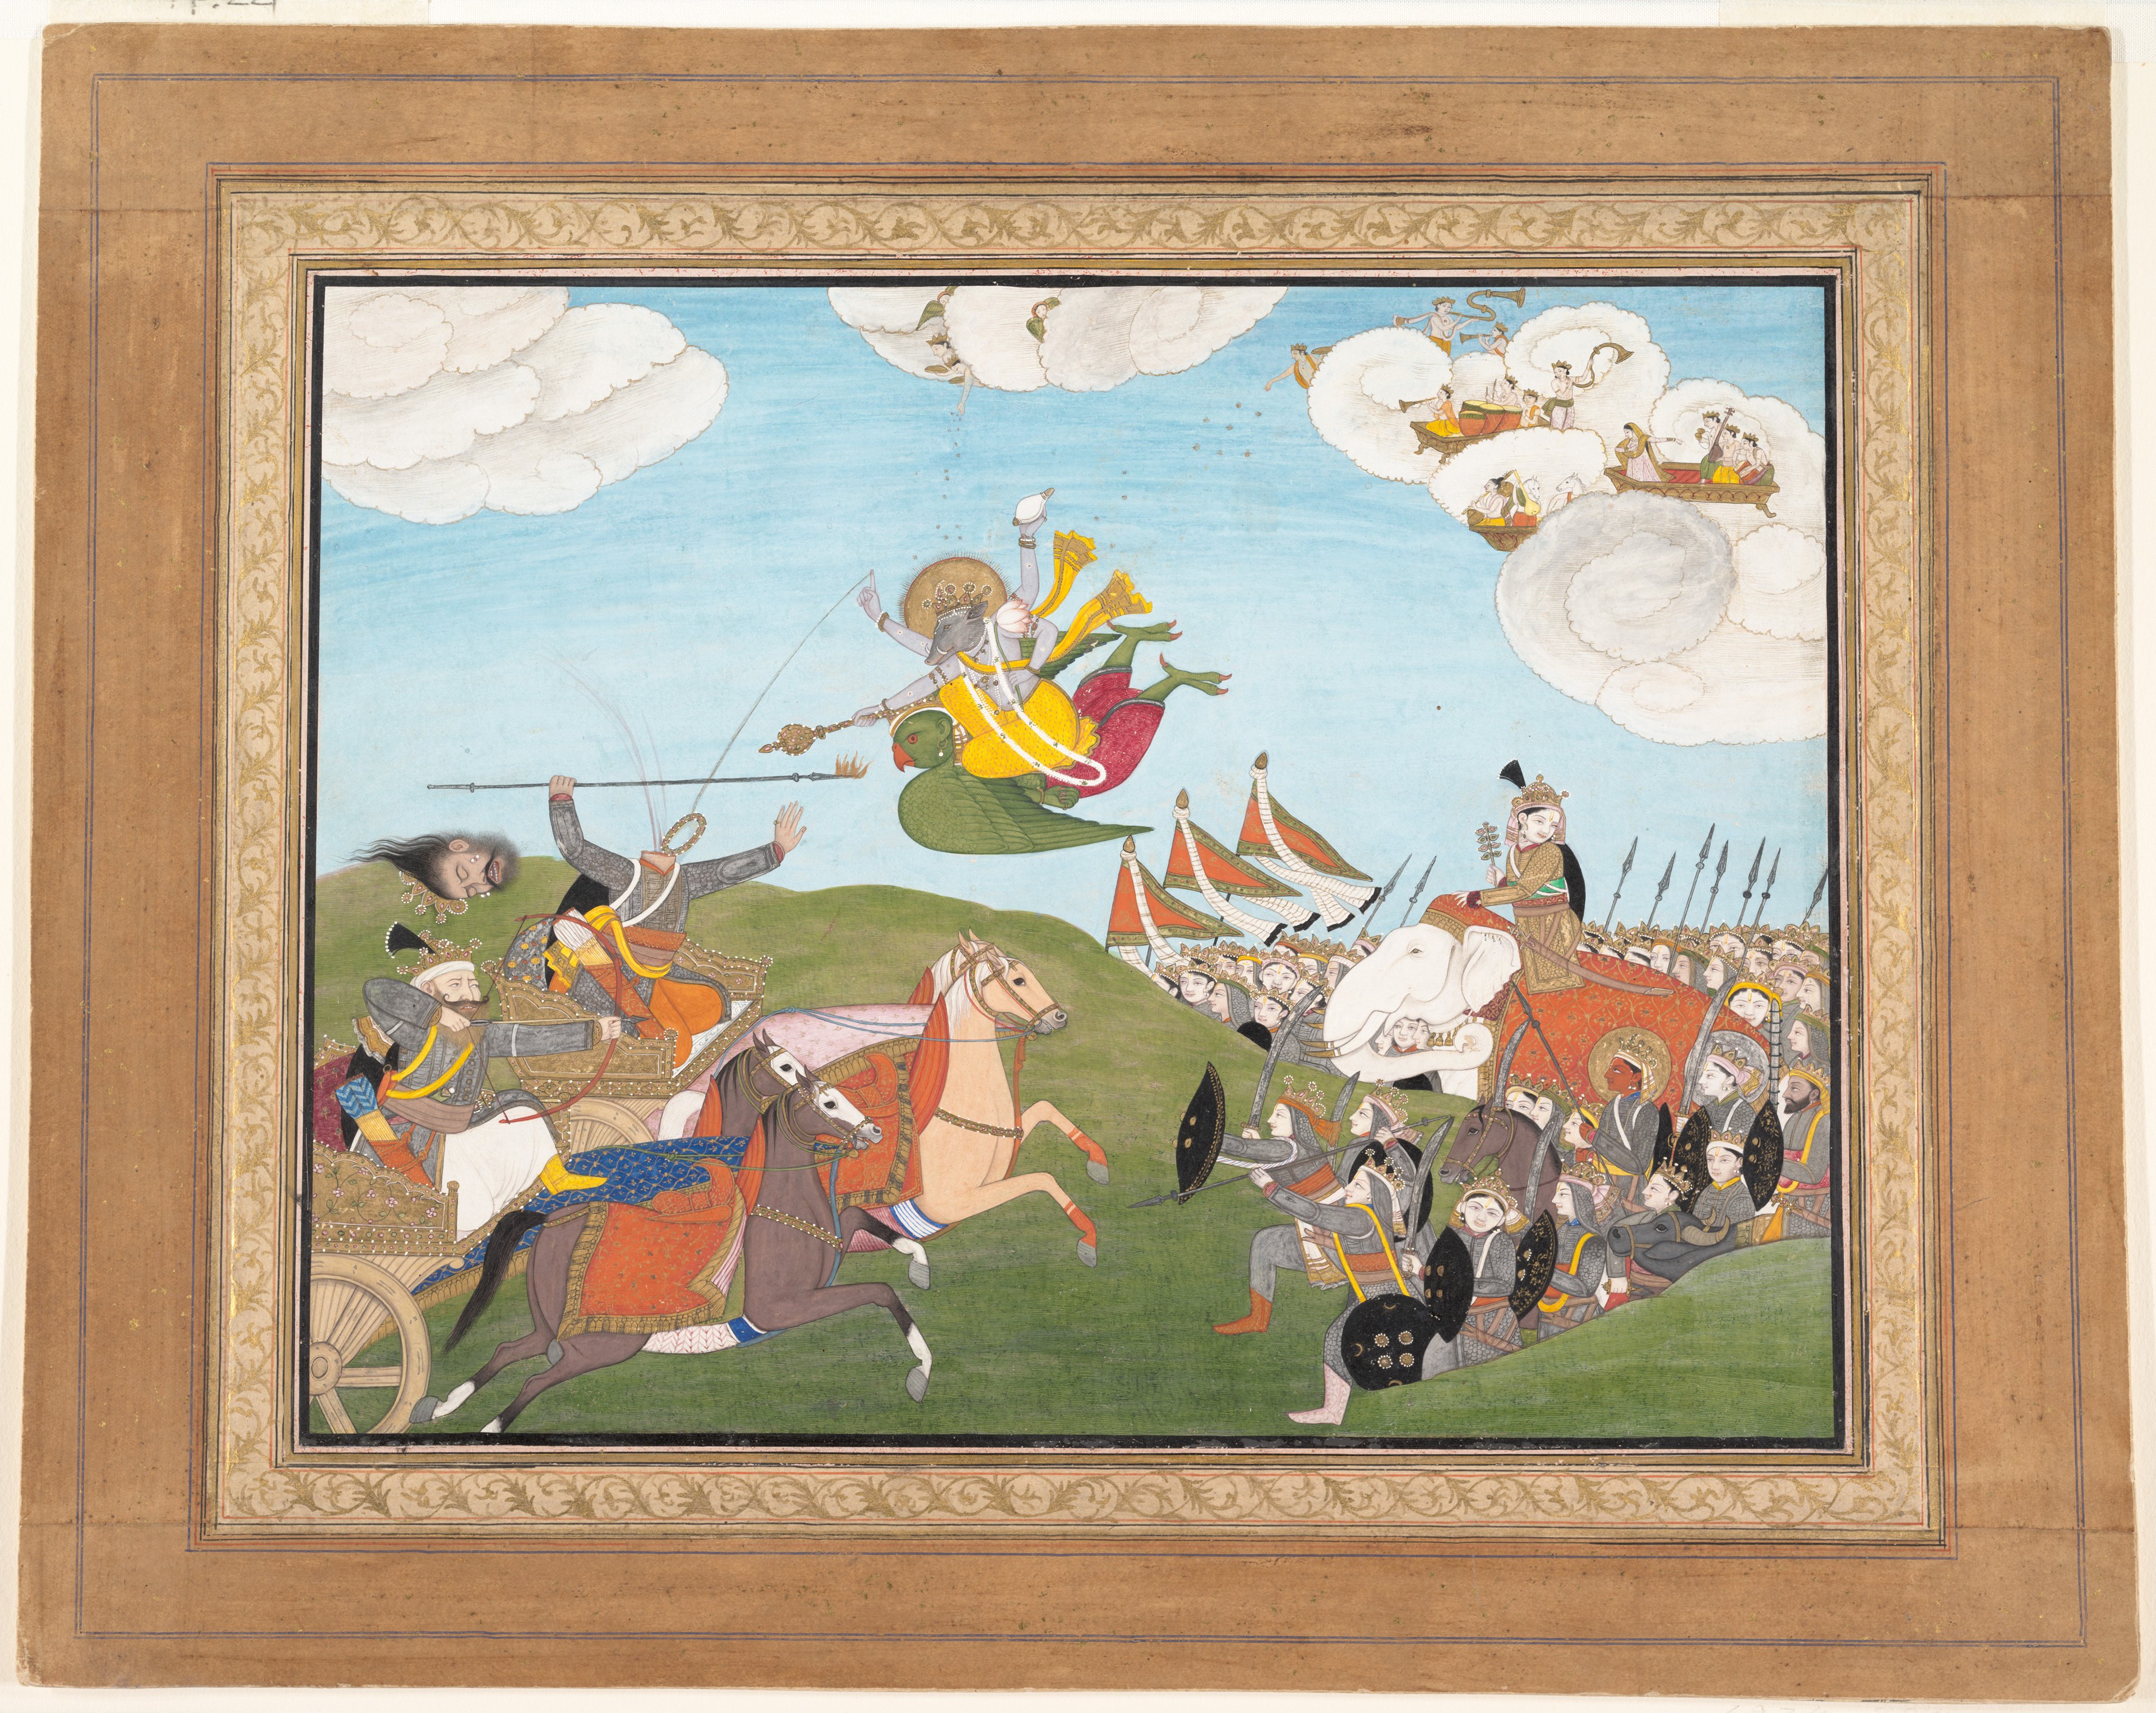 Vishnu as Varaha, the Boar Avatar, Slays Demon Banasur, ca. 1800, Punjab Hills, Guler, India, The Metropolitan Museum of Art, New York, NY, USA. 